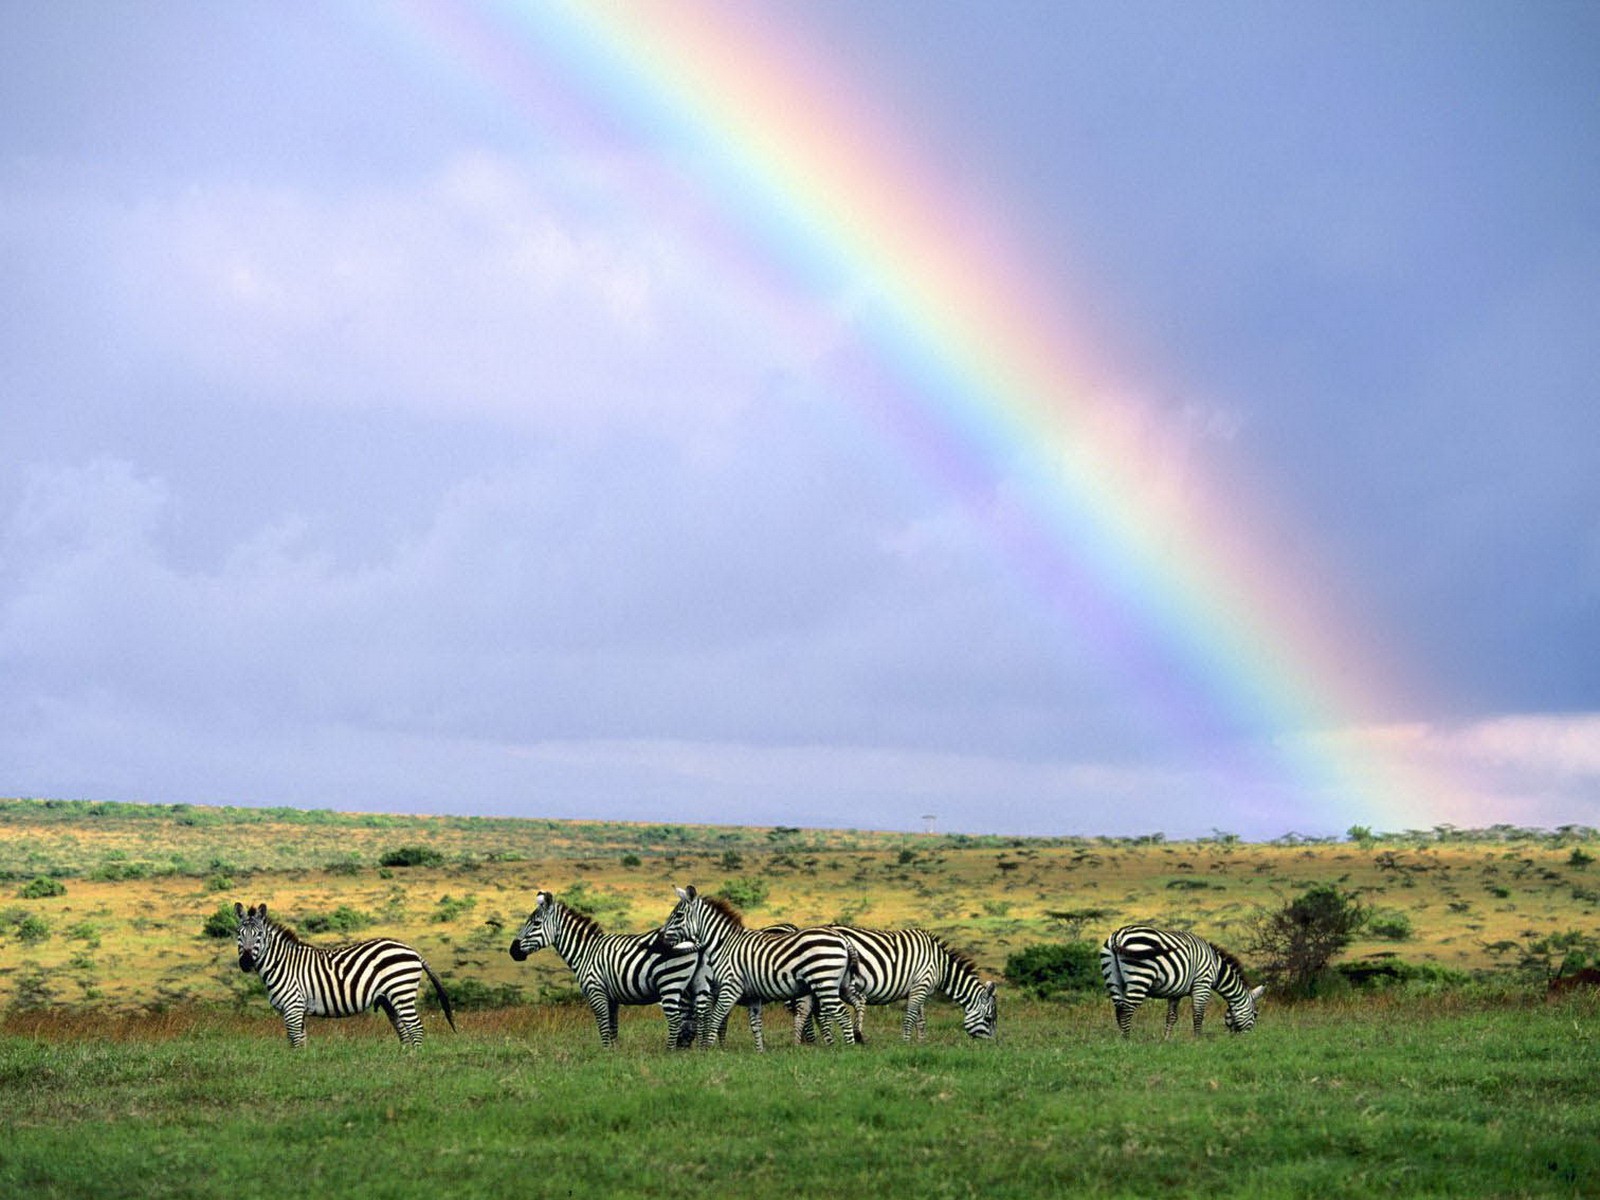 General 1600x1200 field rainbows zebras Africa savannah plains grass nature